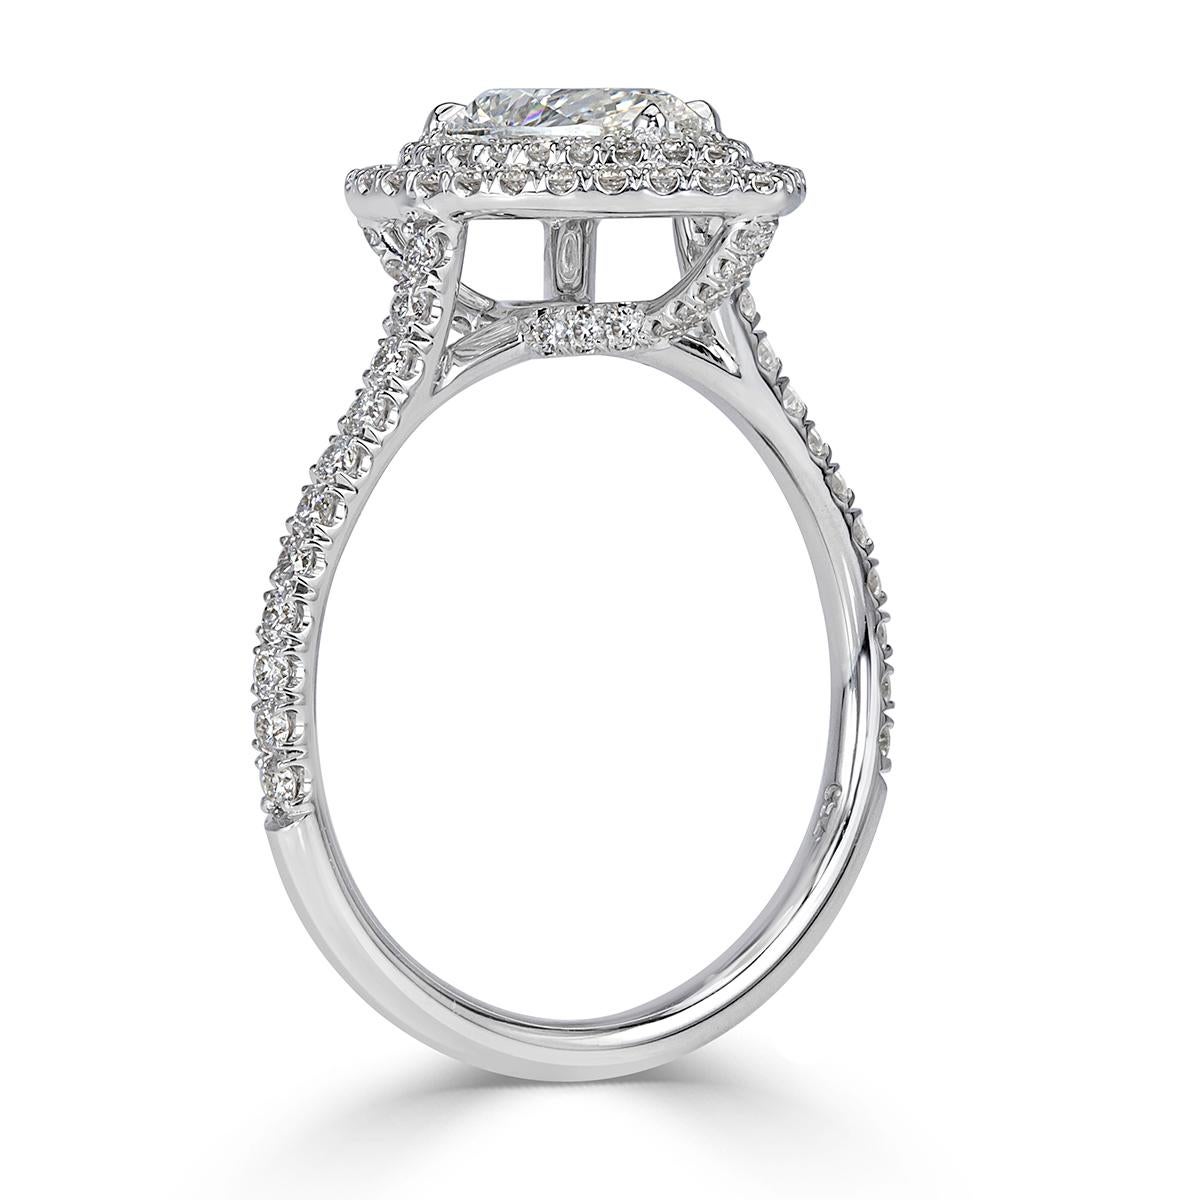 Women's or Men's Mark Broumand 1.62 Carat Pear Shaped Diamond Engagement Ring